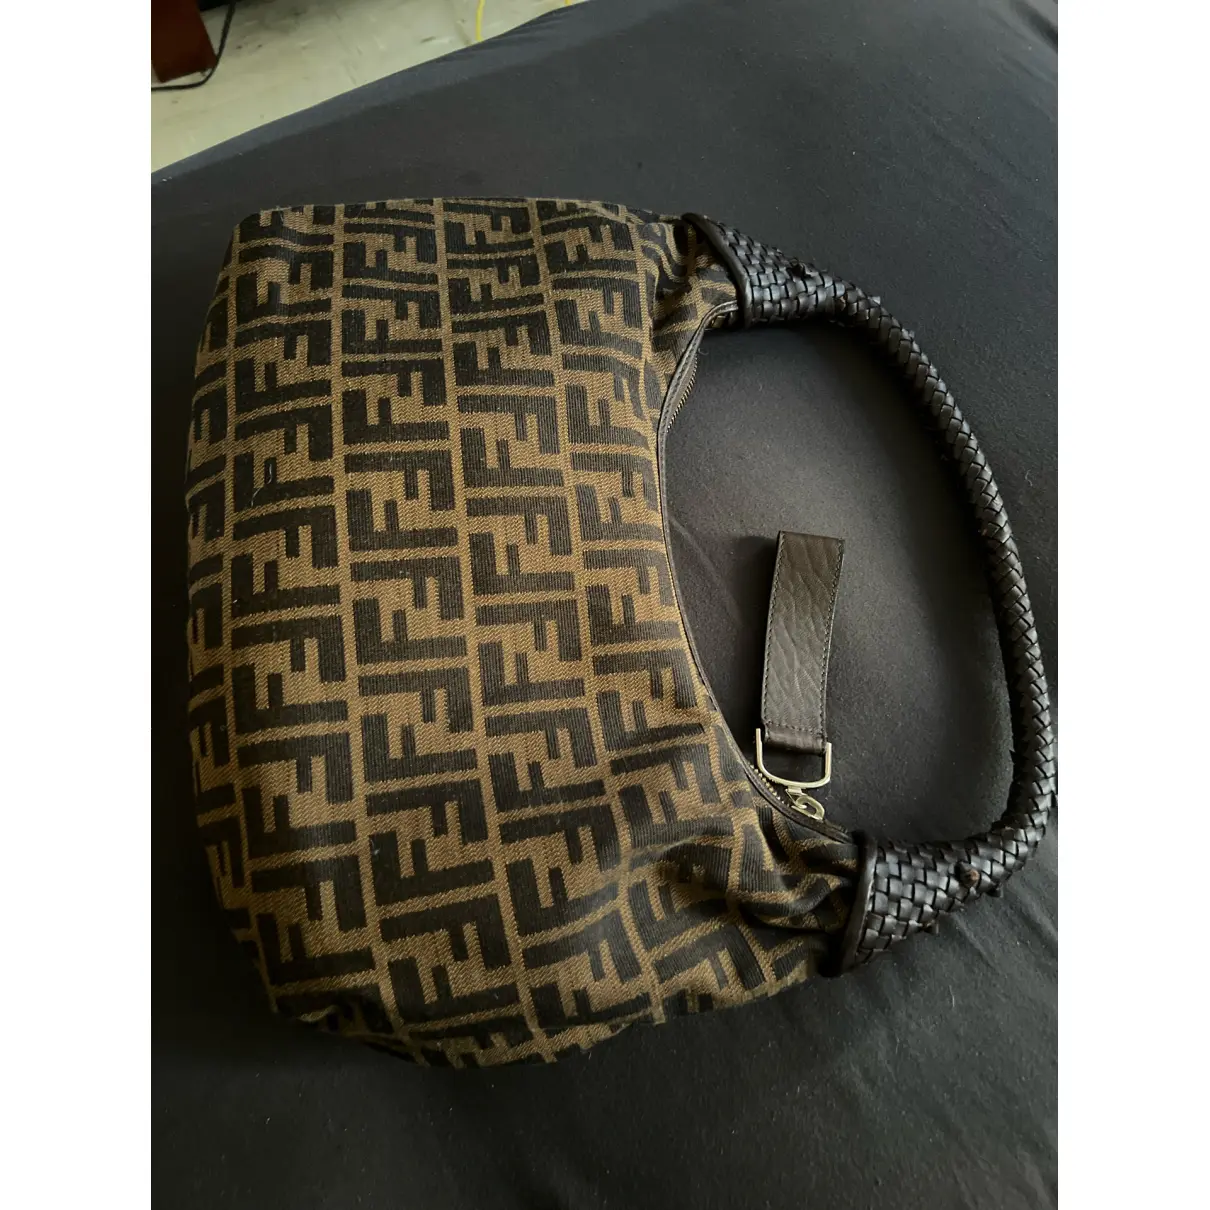 Buy Fendi Spy cloth handbag online - Vintage